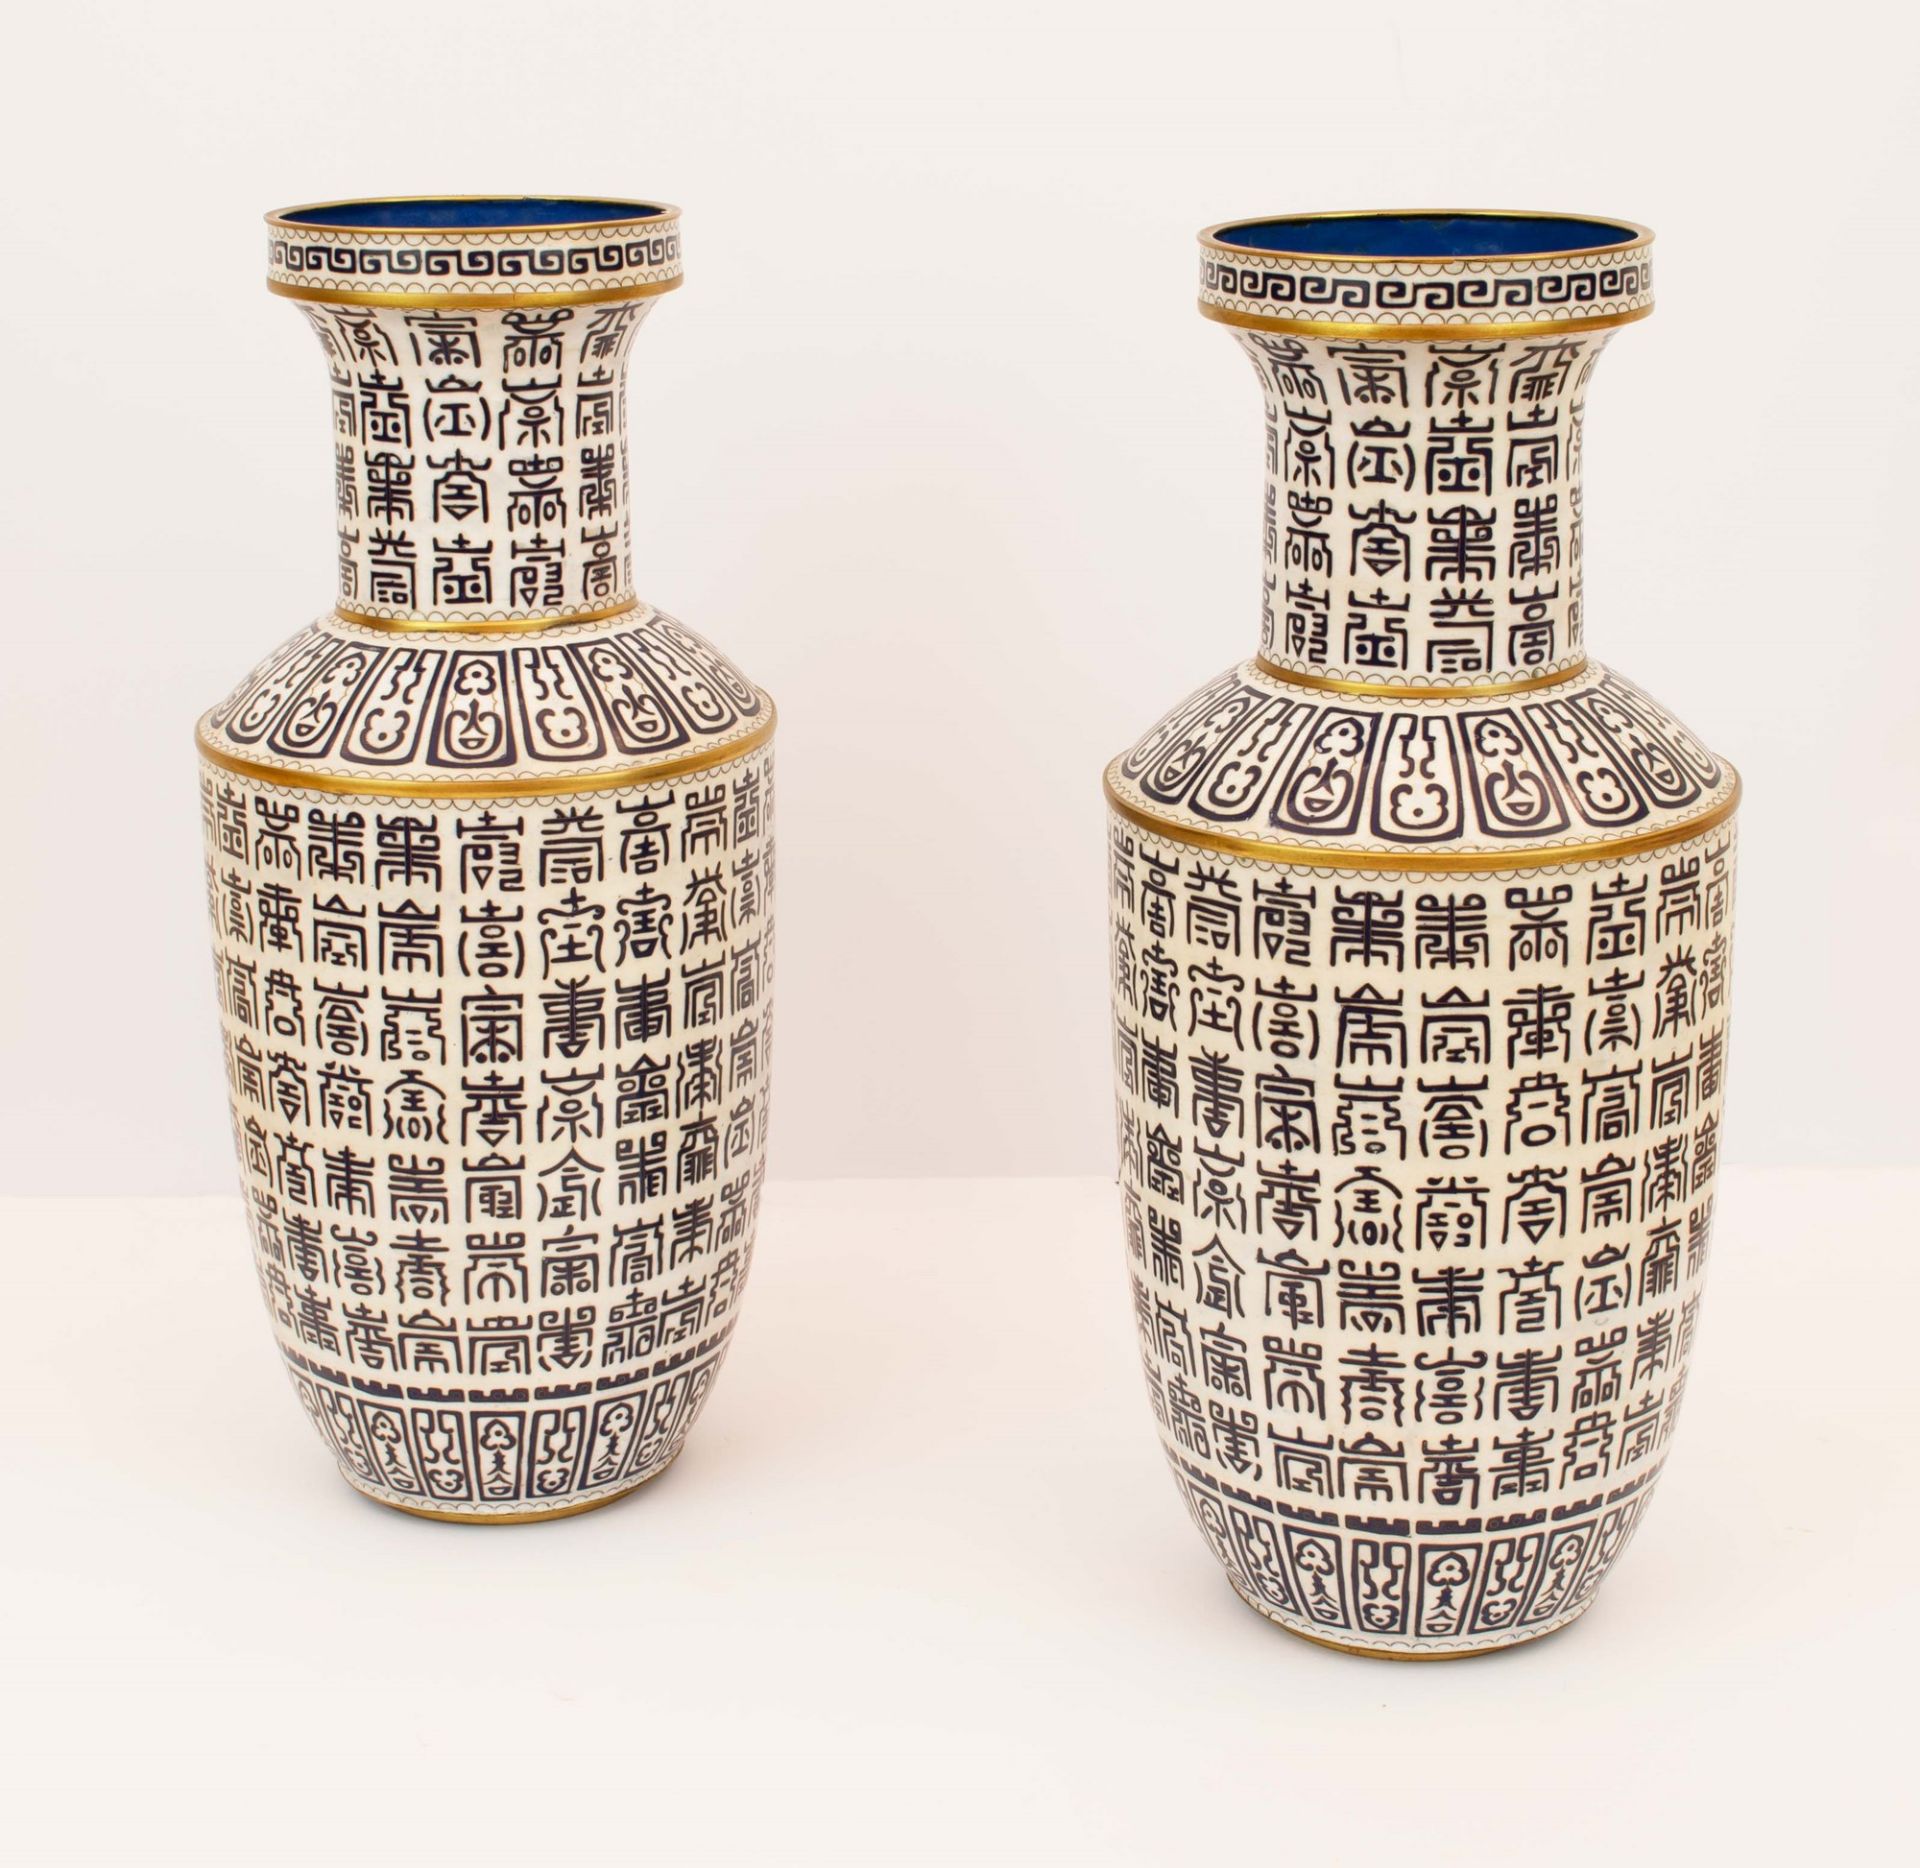 Coppia di vasi cloissonet decorati con caratteri zhanshu. Cina, XIX secolo - Bild 2 aus 2